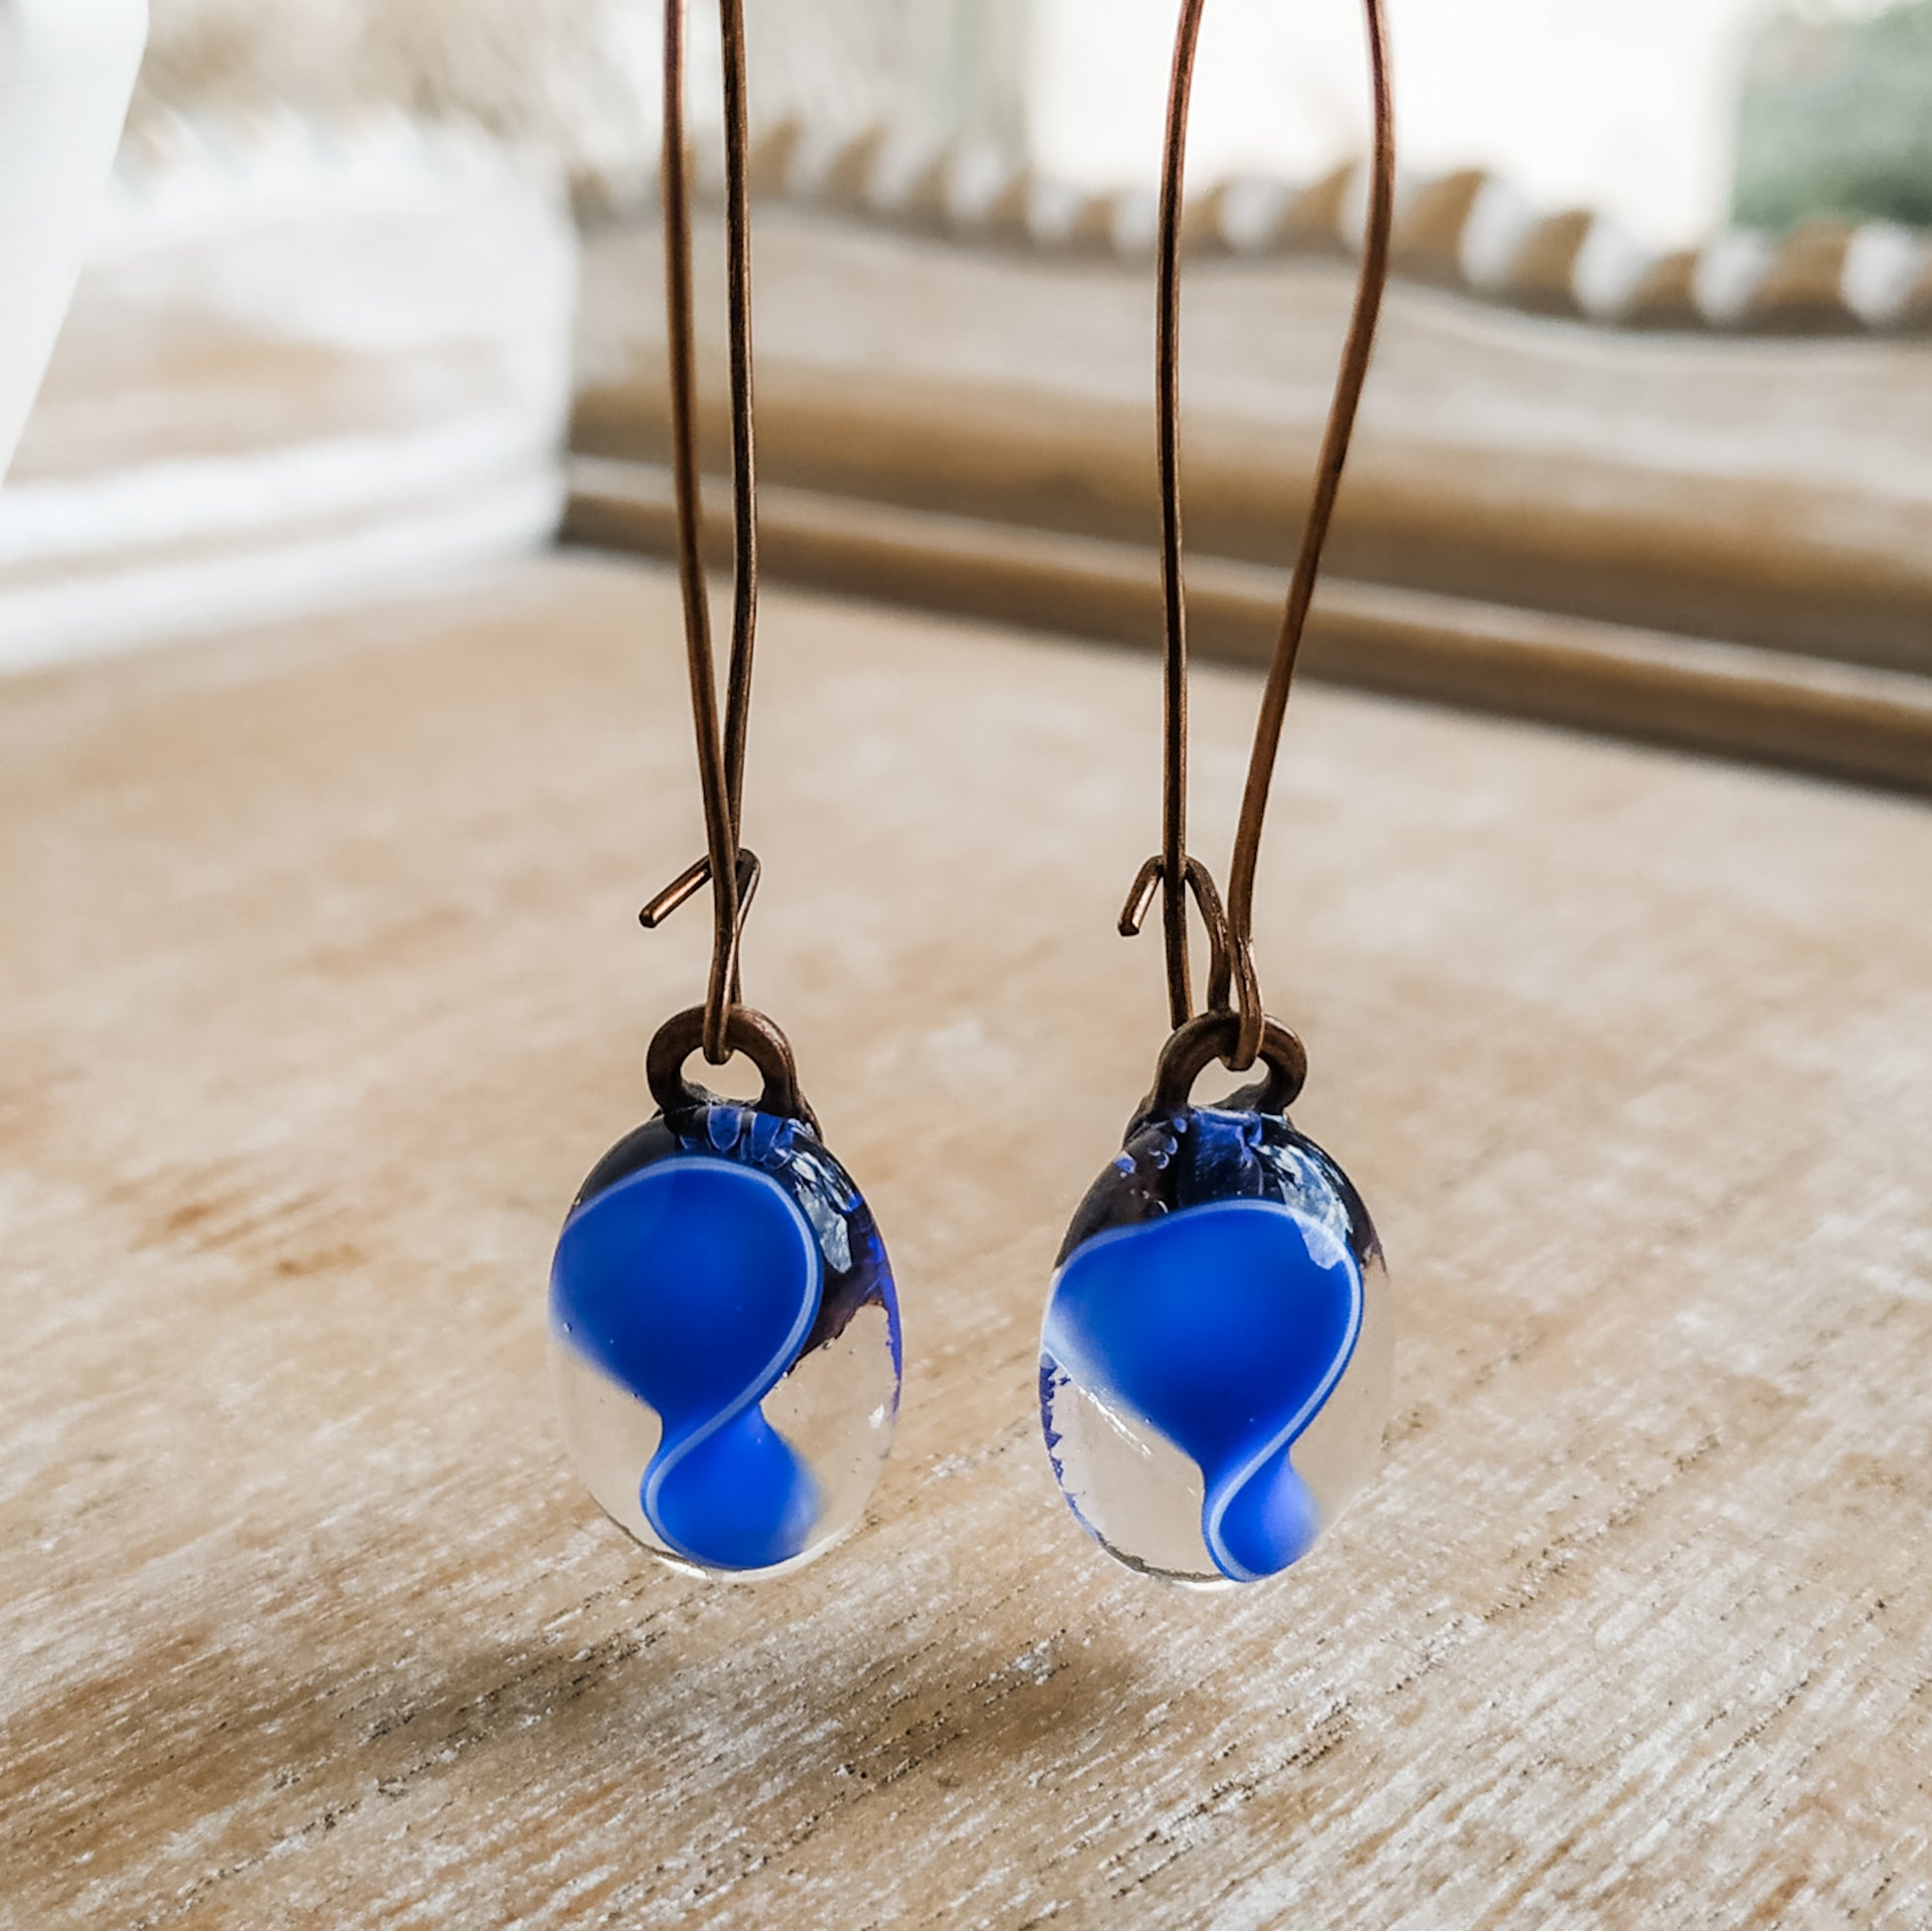 Blue earrings hanging in front of window. handmade by Pamela Angus 